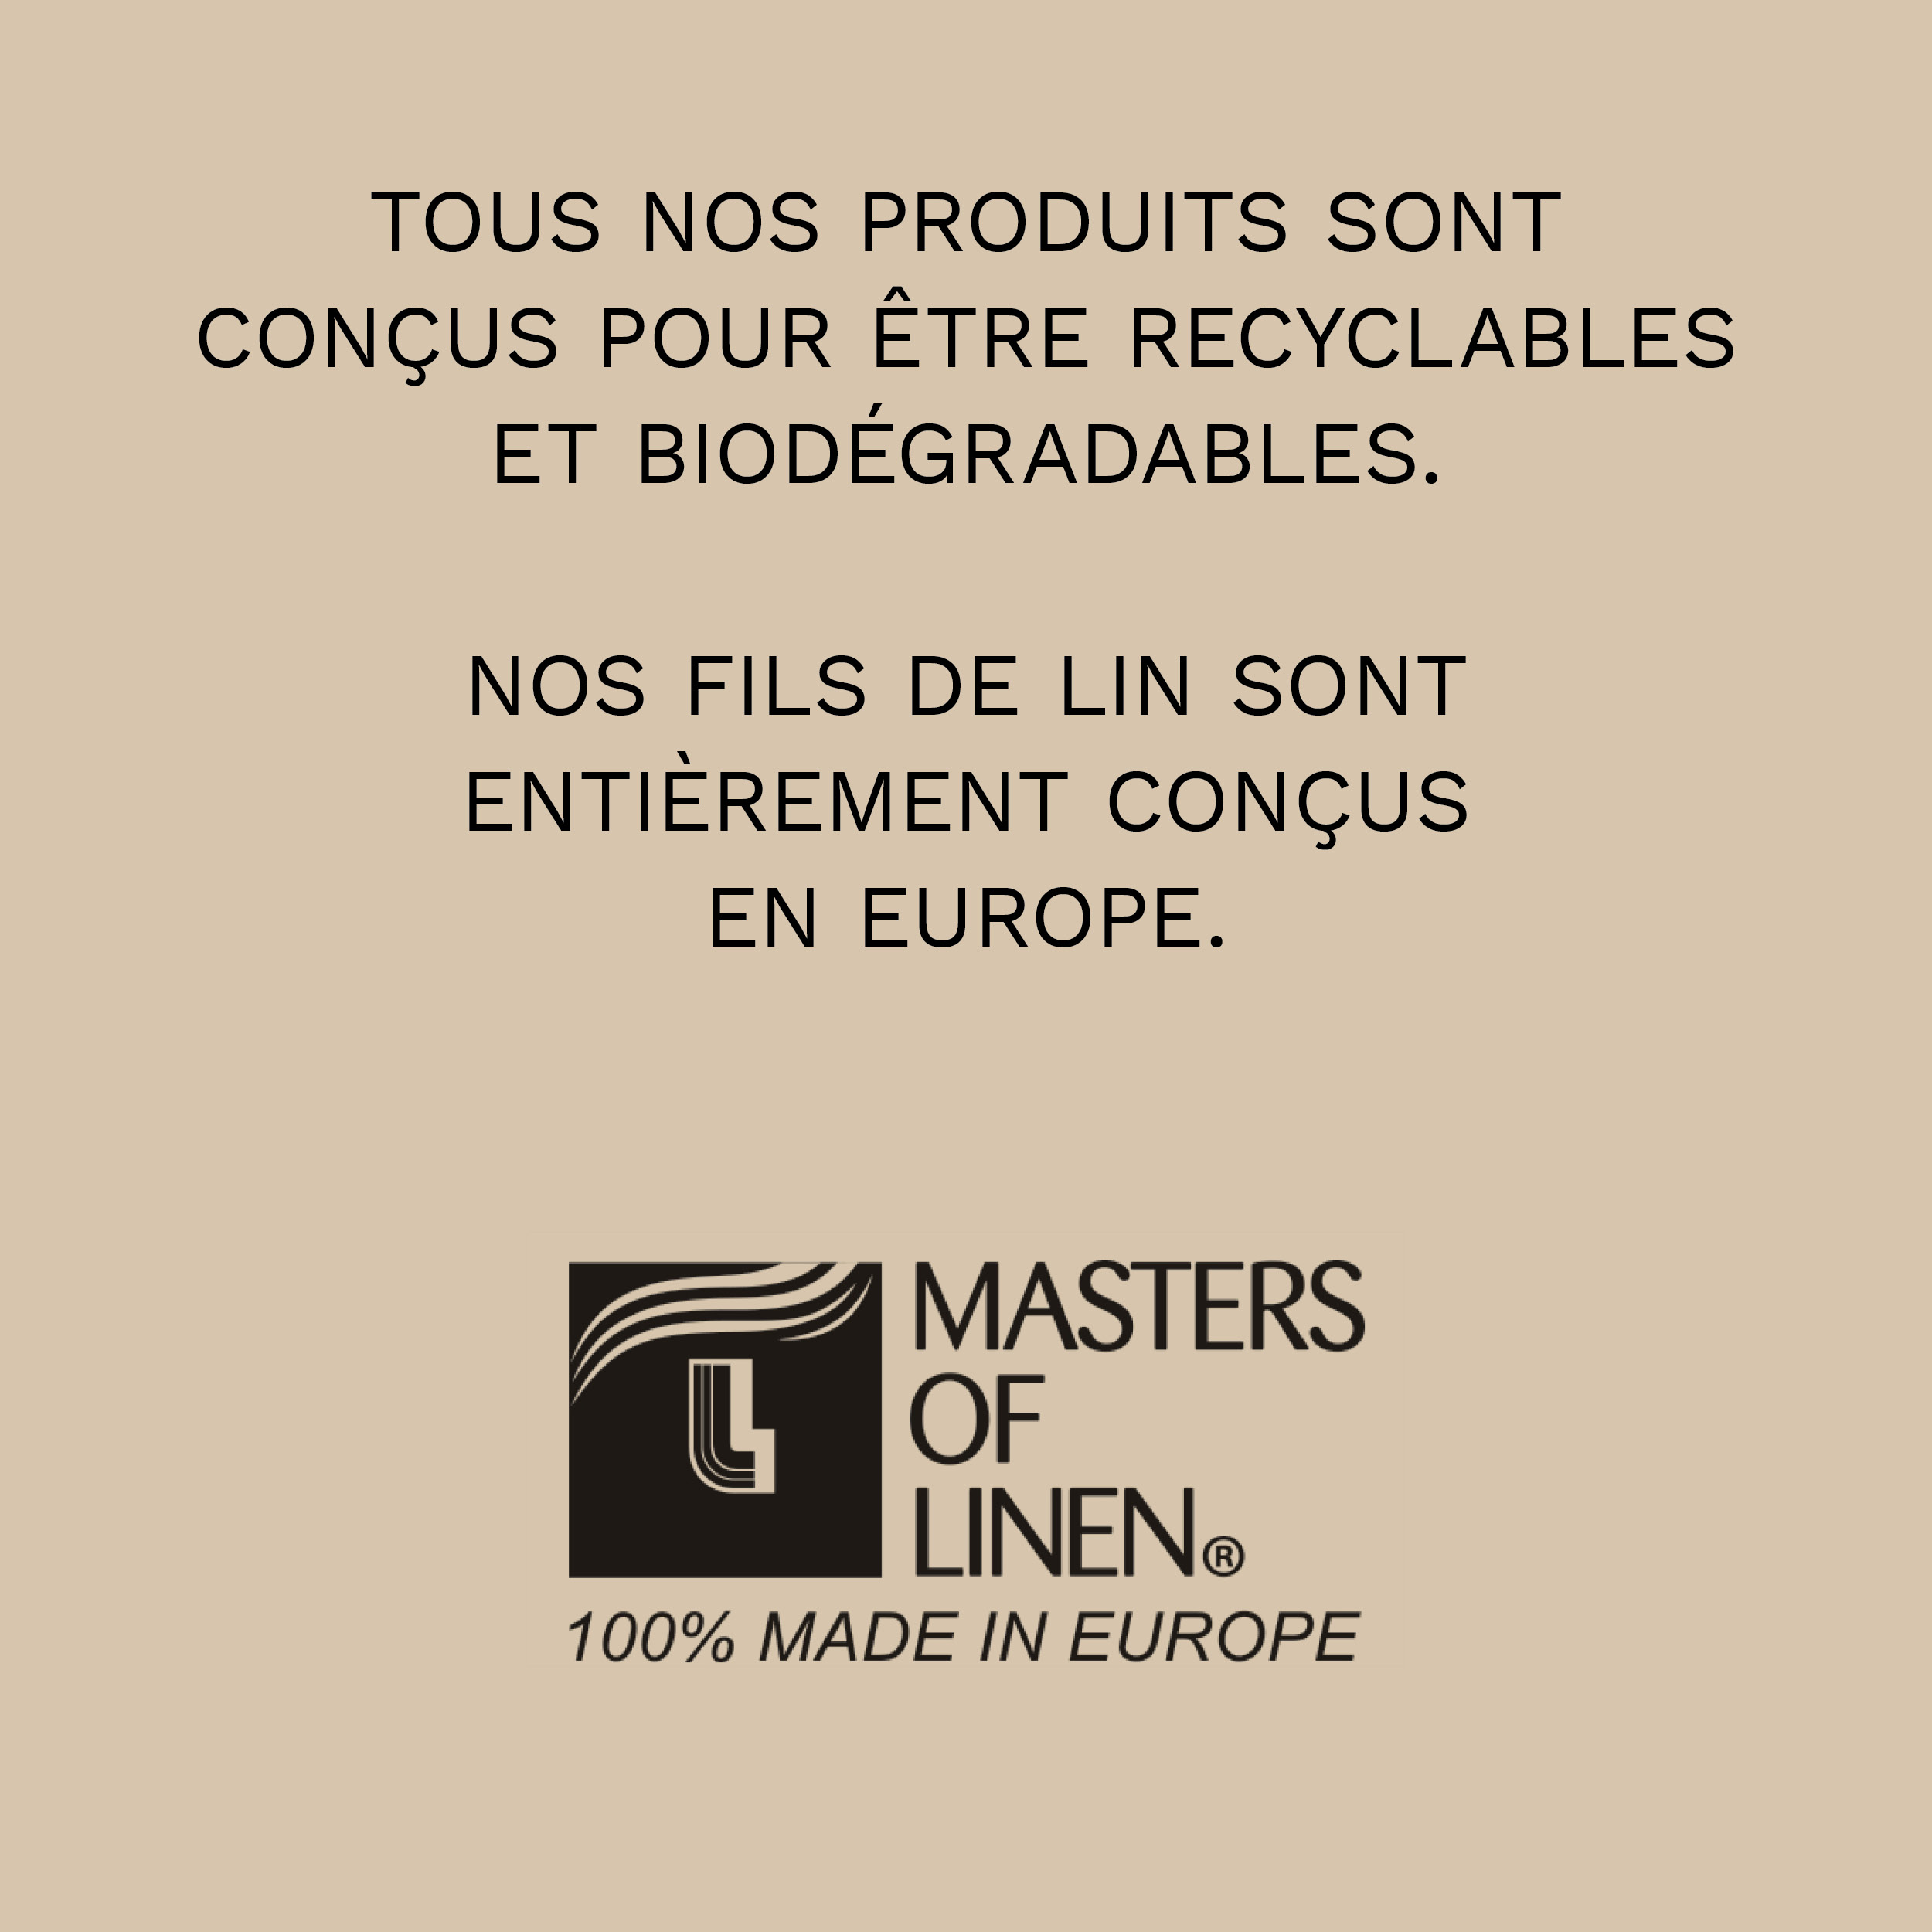 Essuie-tout 100% recyclé Origine France Garantie Biodégradable